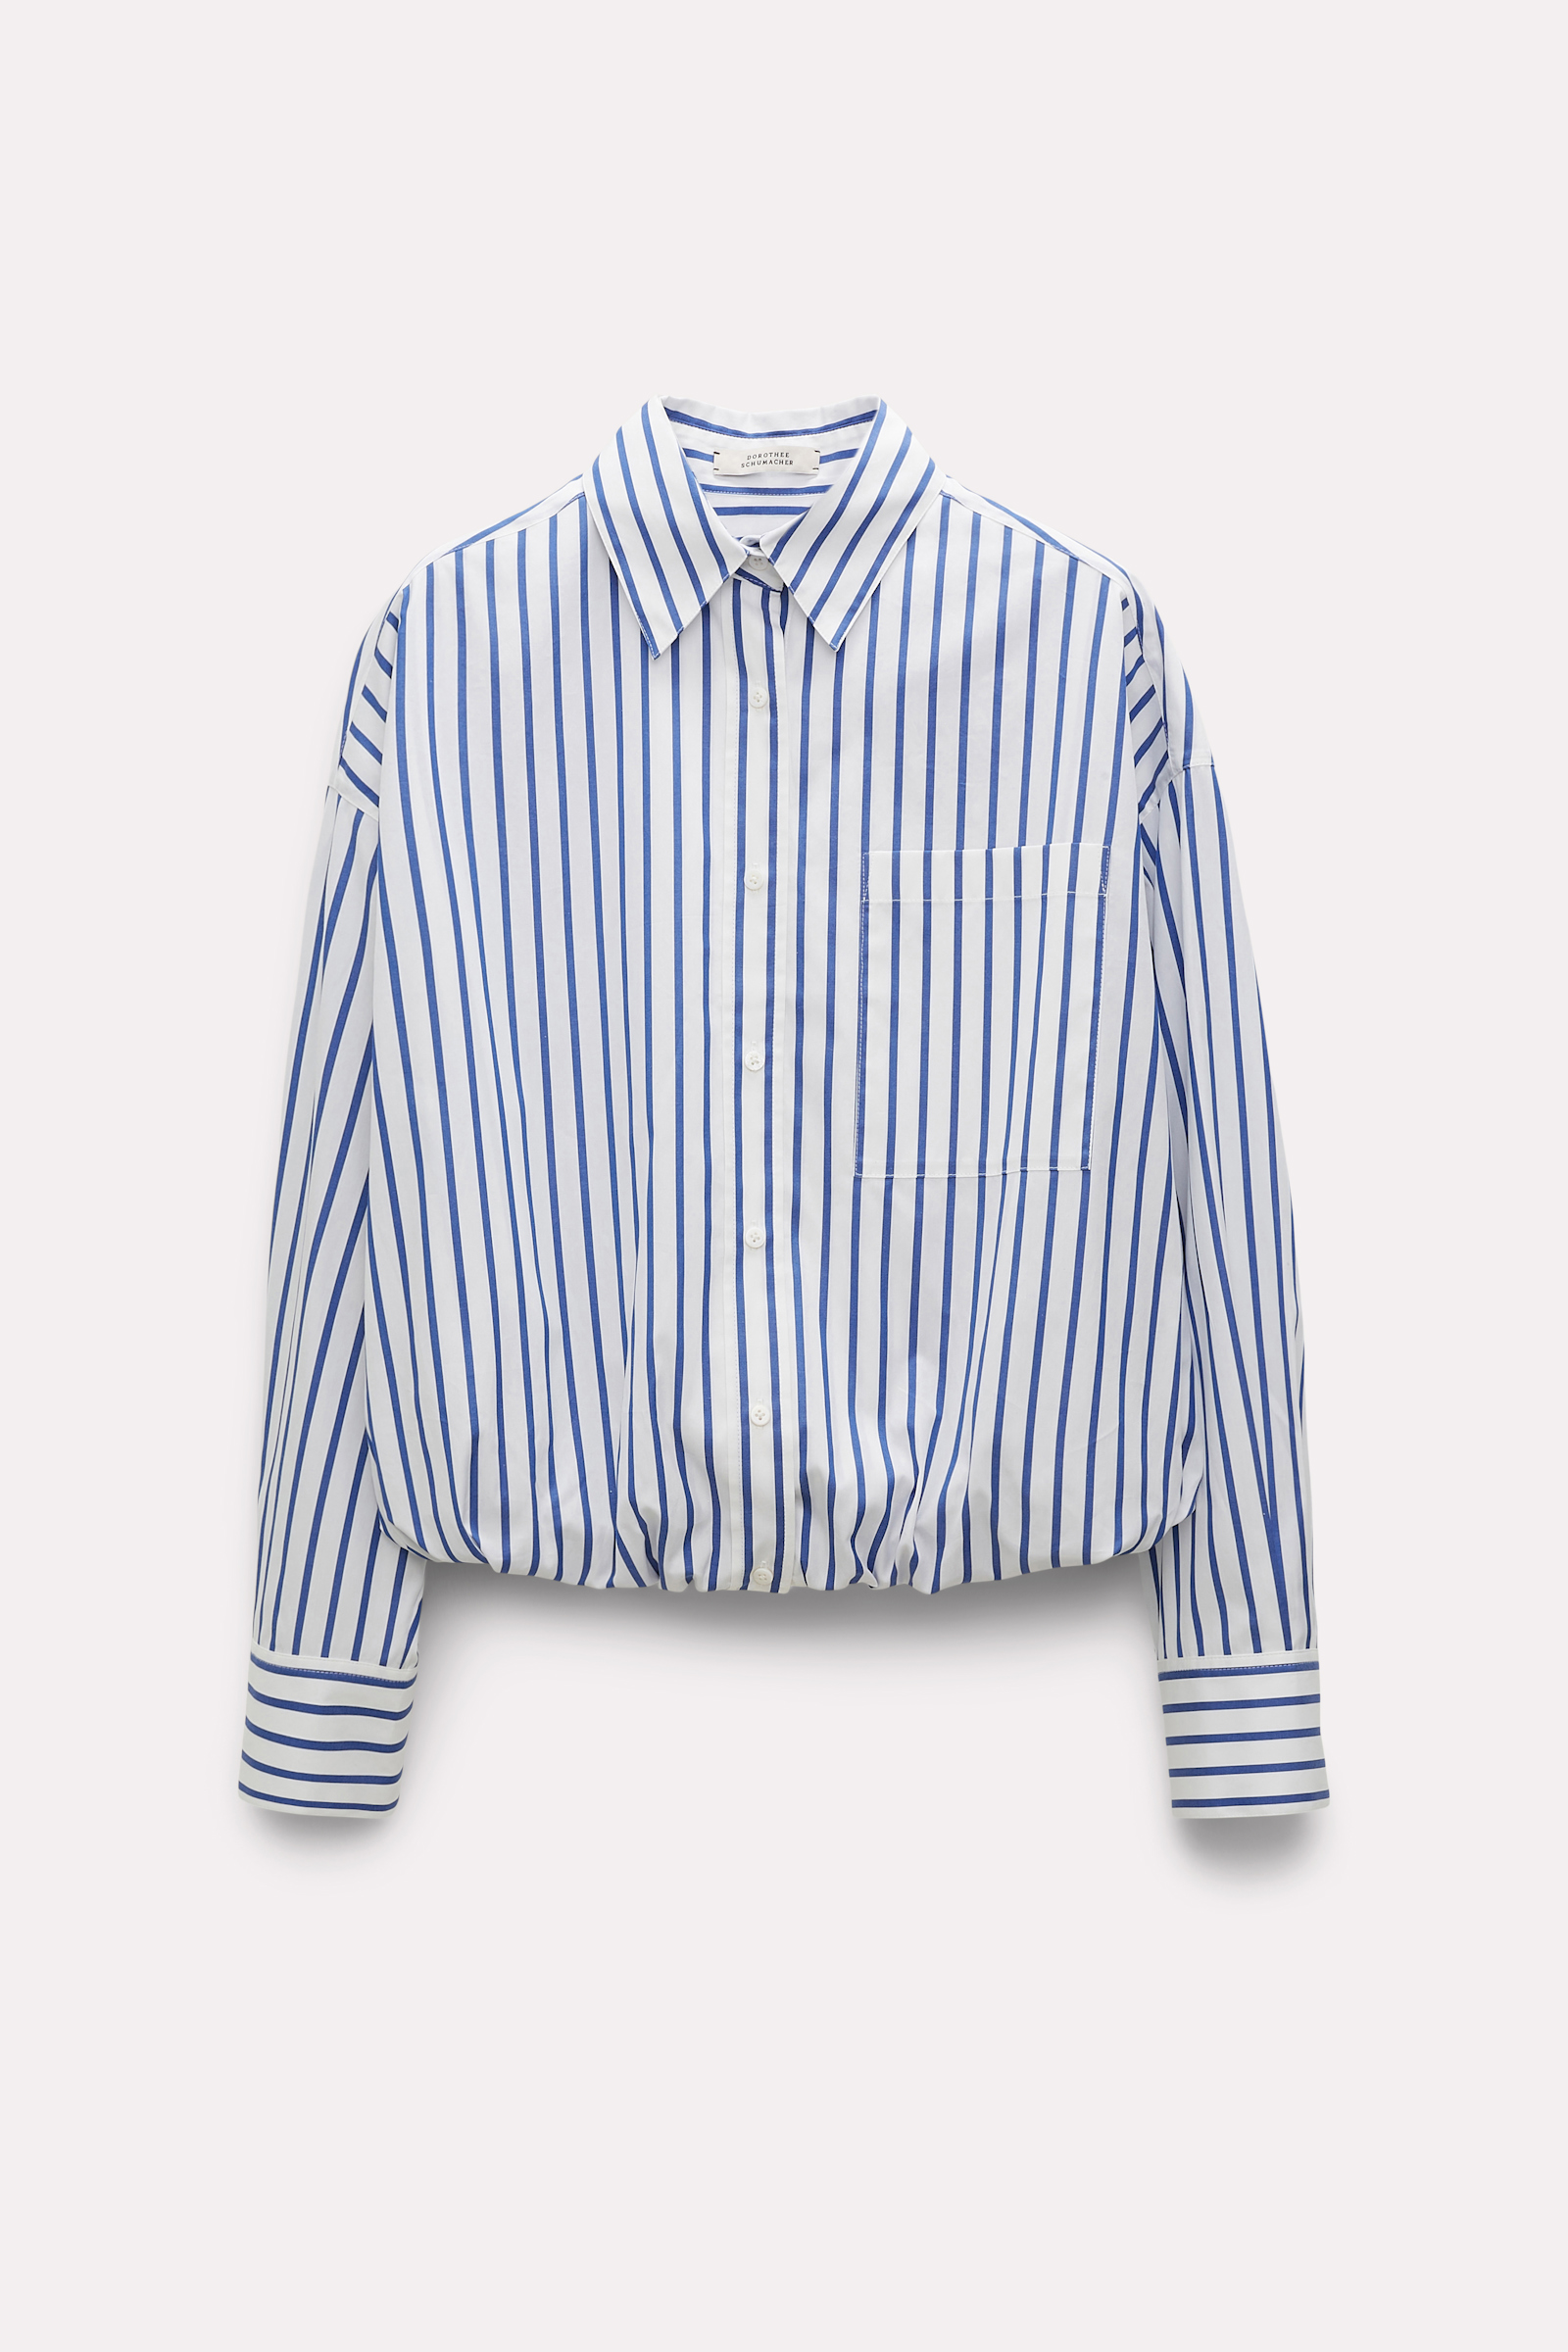 Dorothee Schumacher Striped cotton shirt with balloon hem navy & white stripes